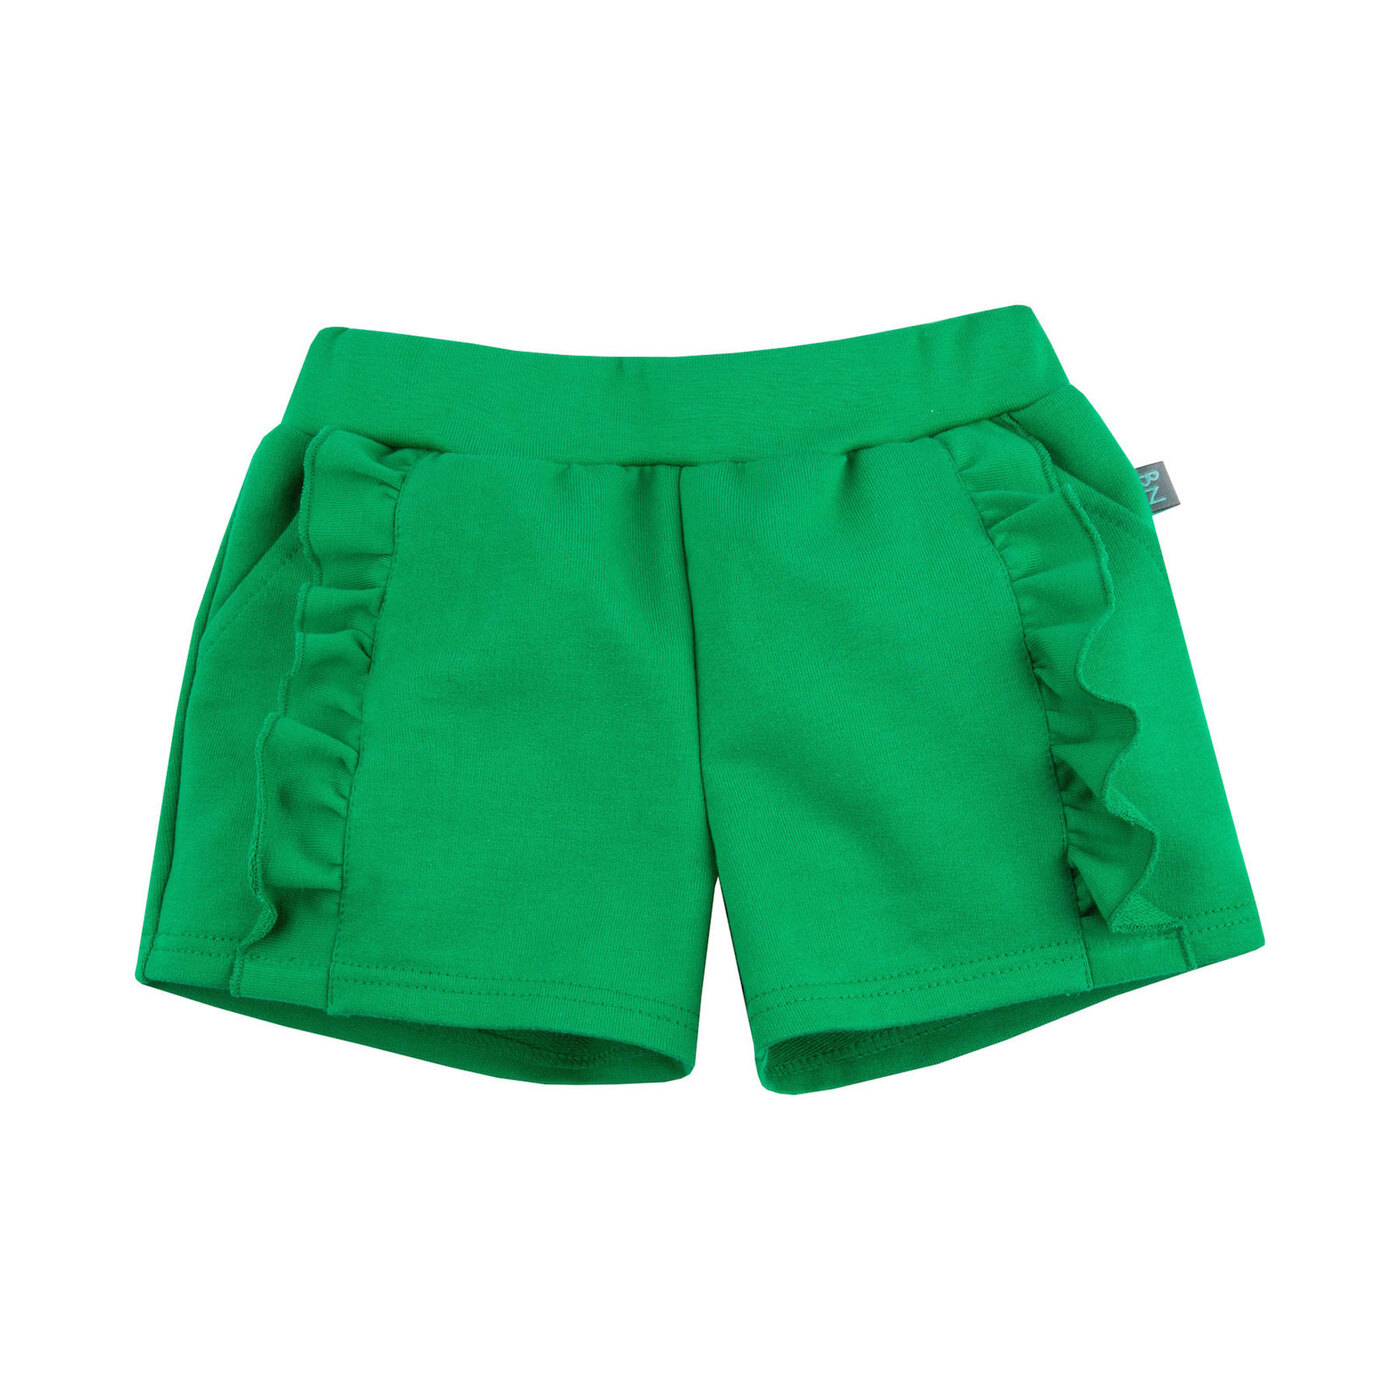 Шорты 134. Зеленые шорты. Шорты для девочки (размер 134). Шорты для девочки зеленые. Девчонки зелёных шортах.